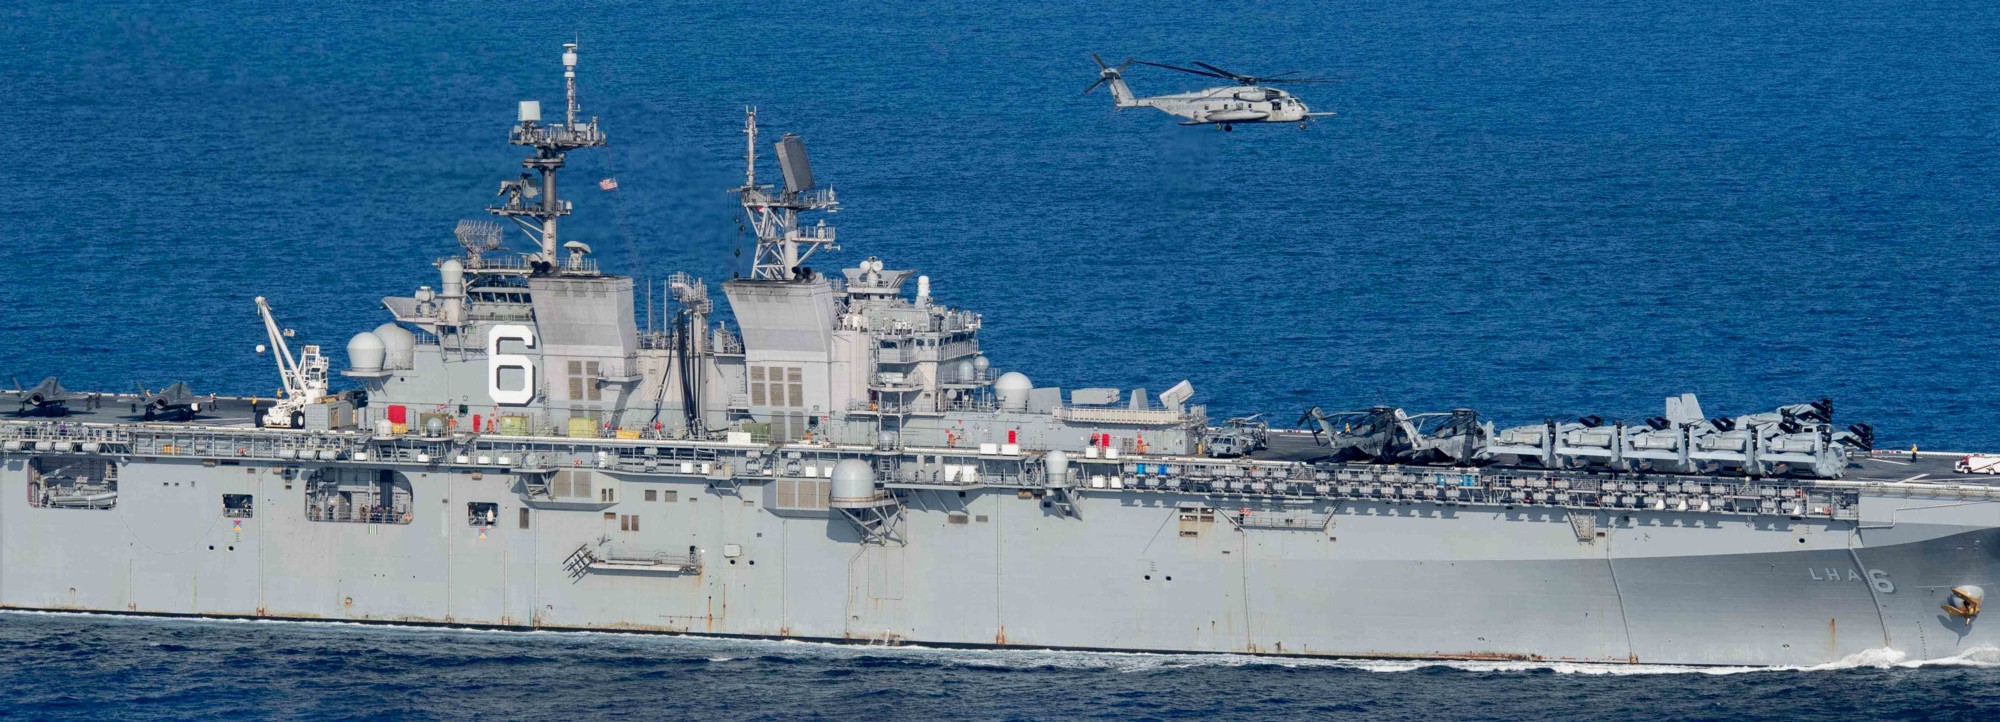 lha-6 uss america amphibious assault ship landing us navy marines vmm-265 south china sea 174